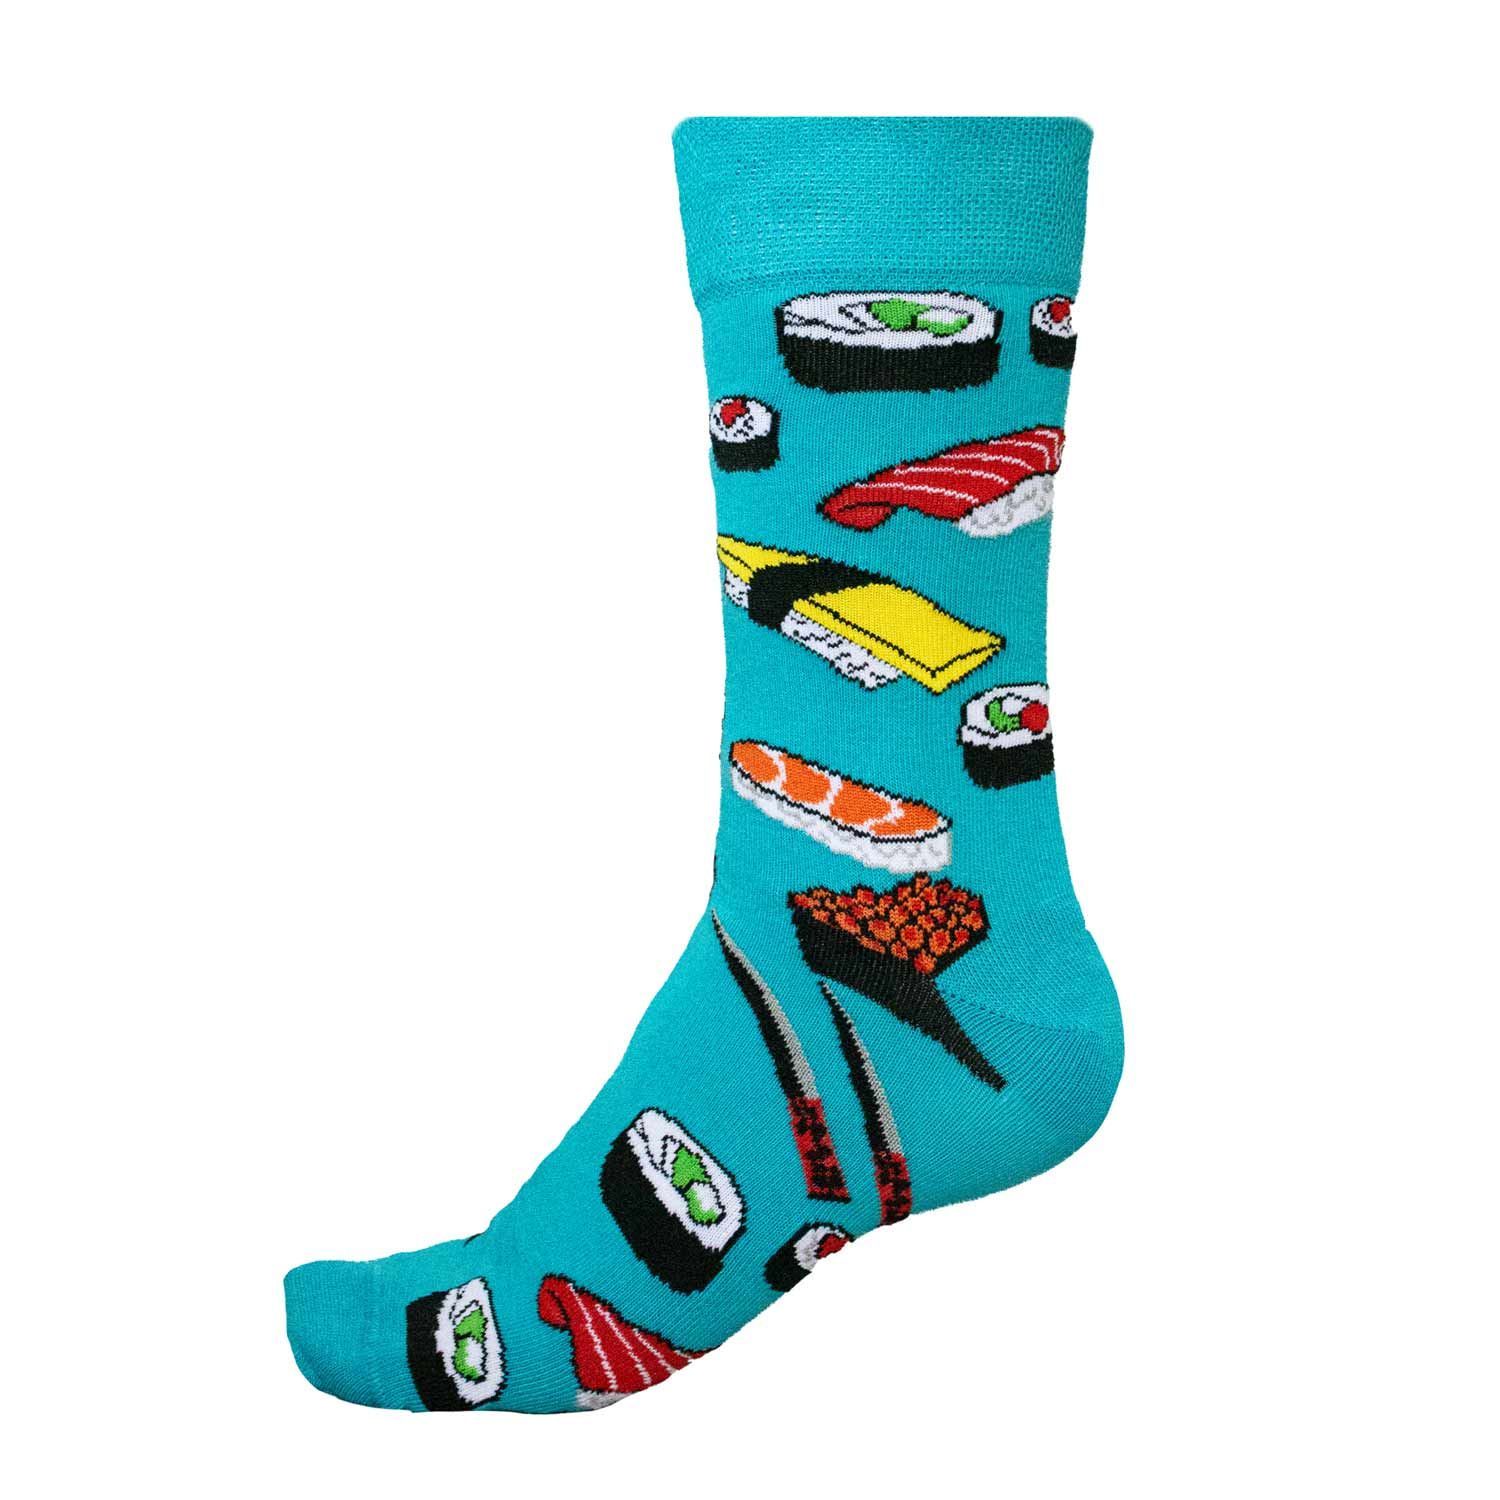 Sushi Desenli Spor Çorap